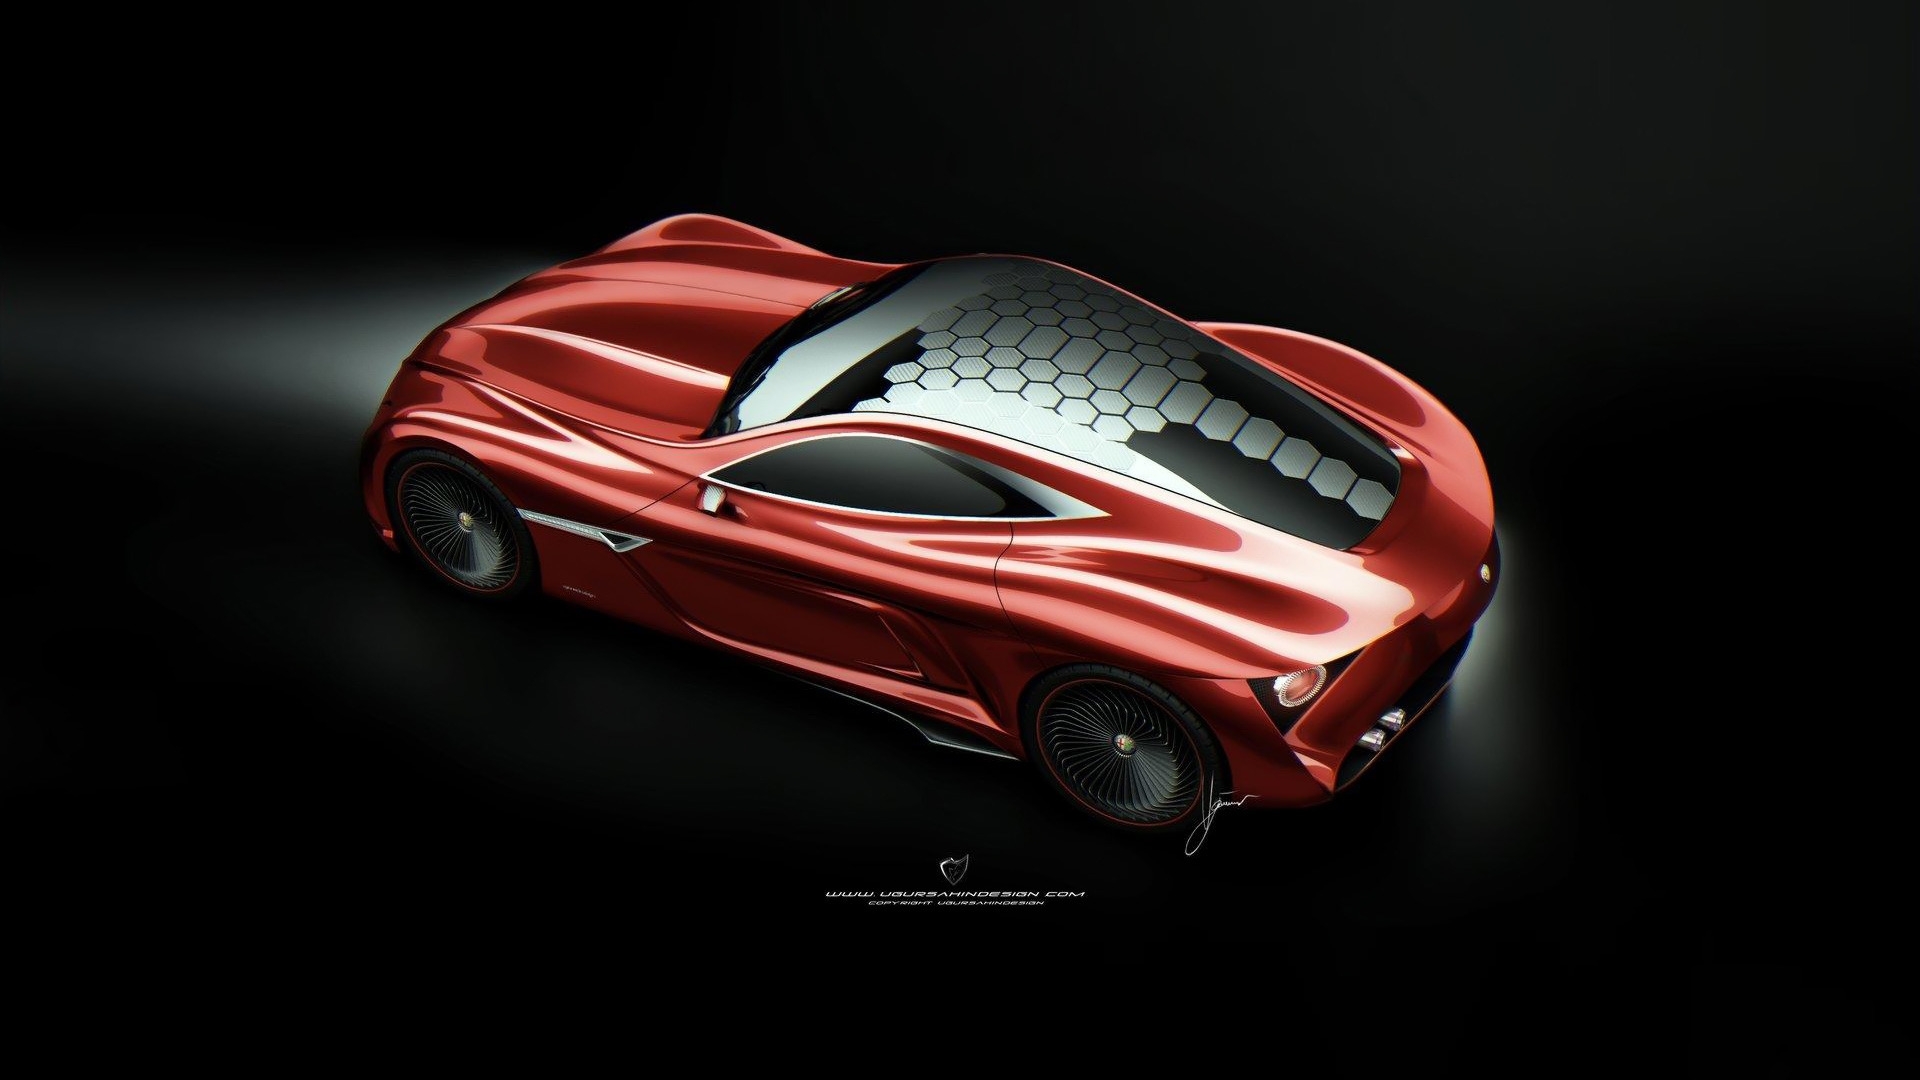 Amazing Alfa Romeo Concept for 1920 x 1080 HDTV 1080p resolution